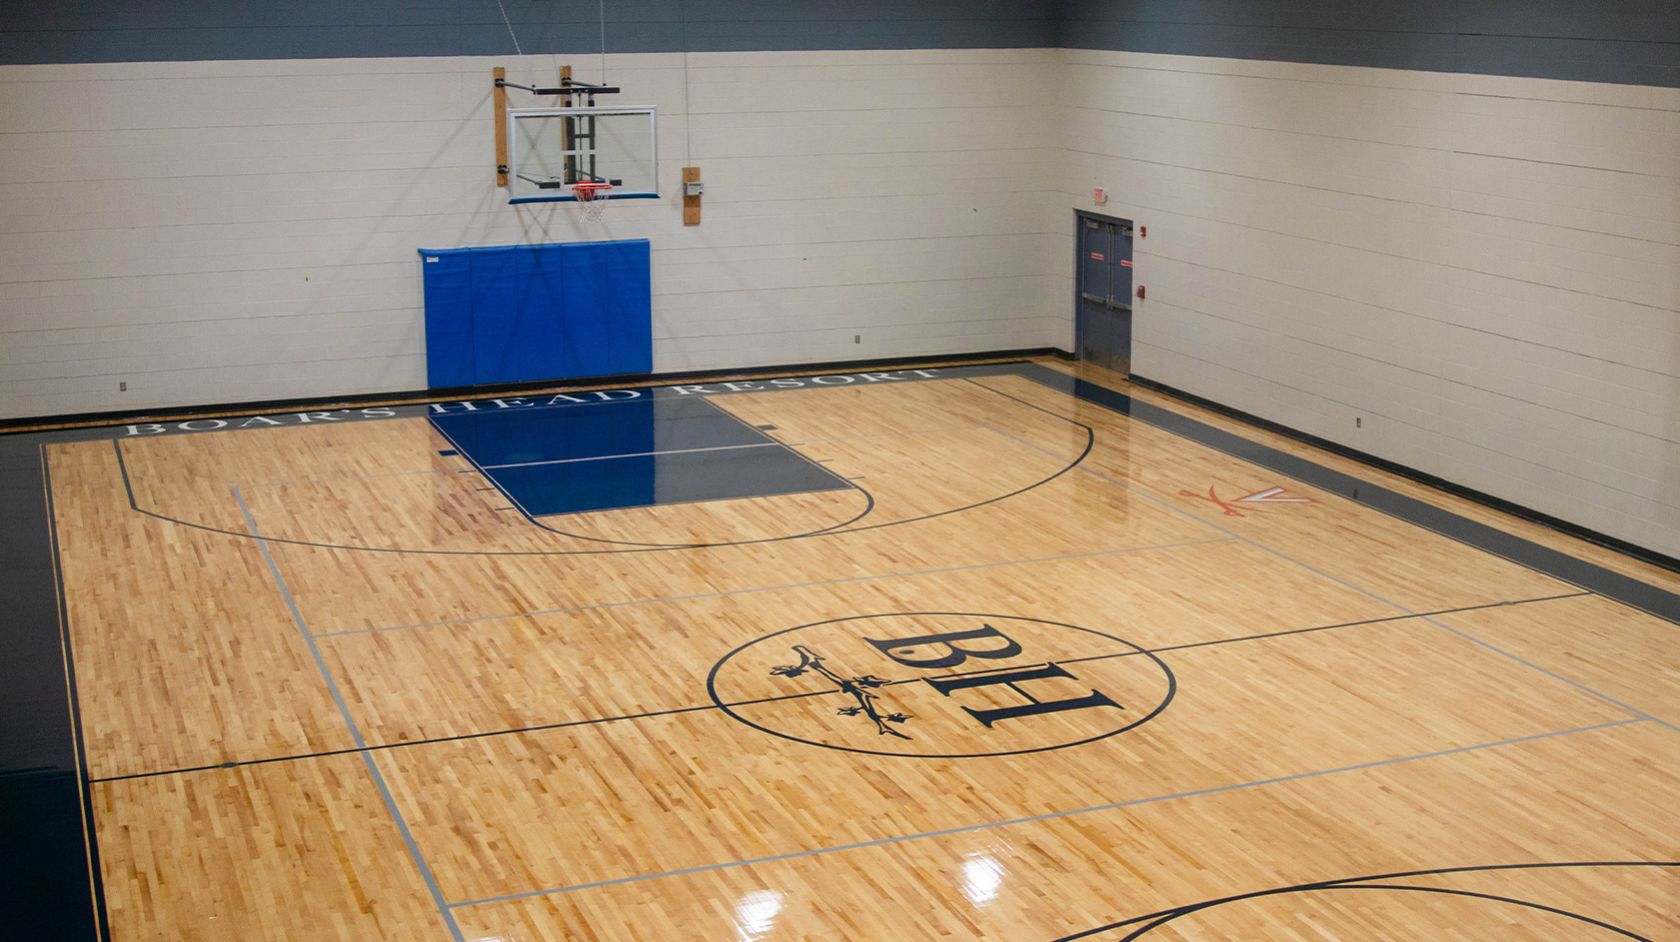 A Basketball Court With A Basketball Hoop